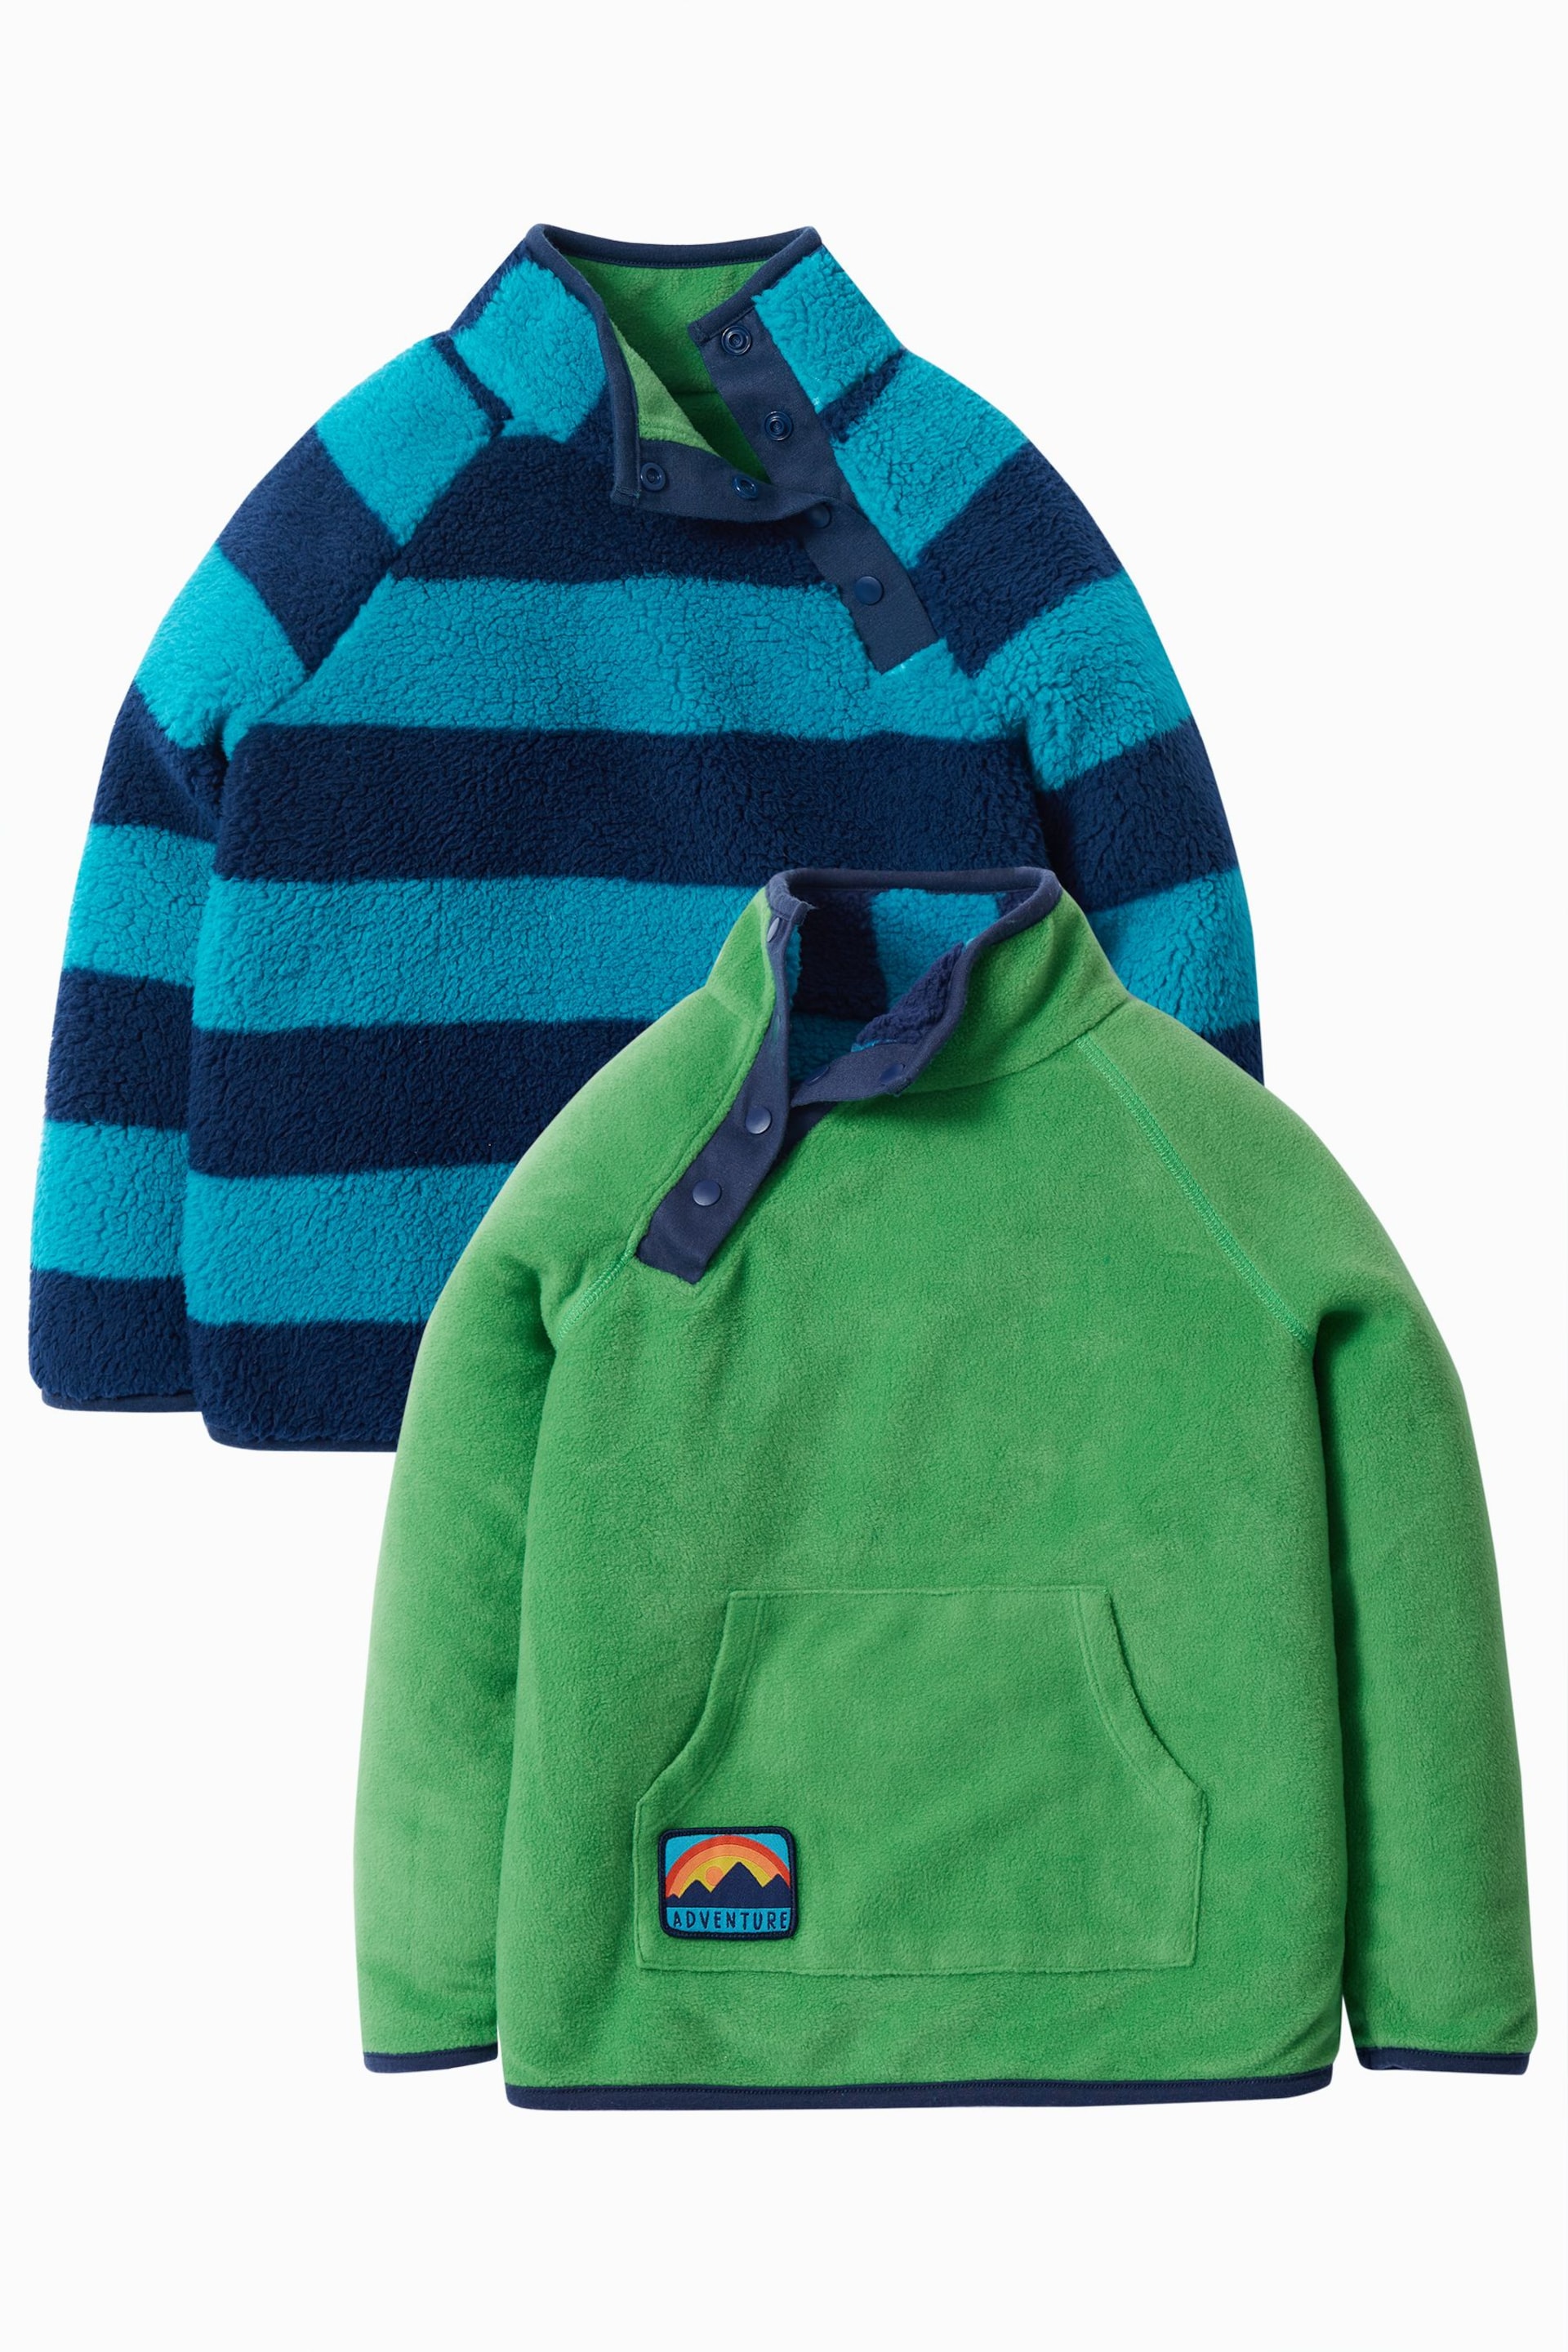 Frugi Blue Stripe Reversible Snuggle Fleece - Image 1 of 5